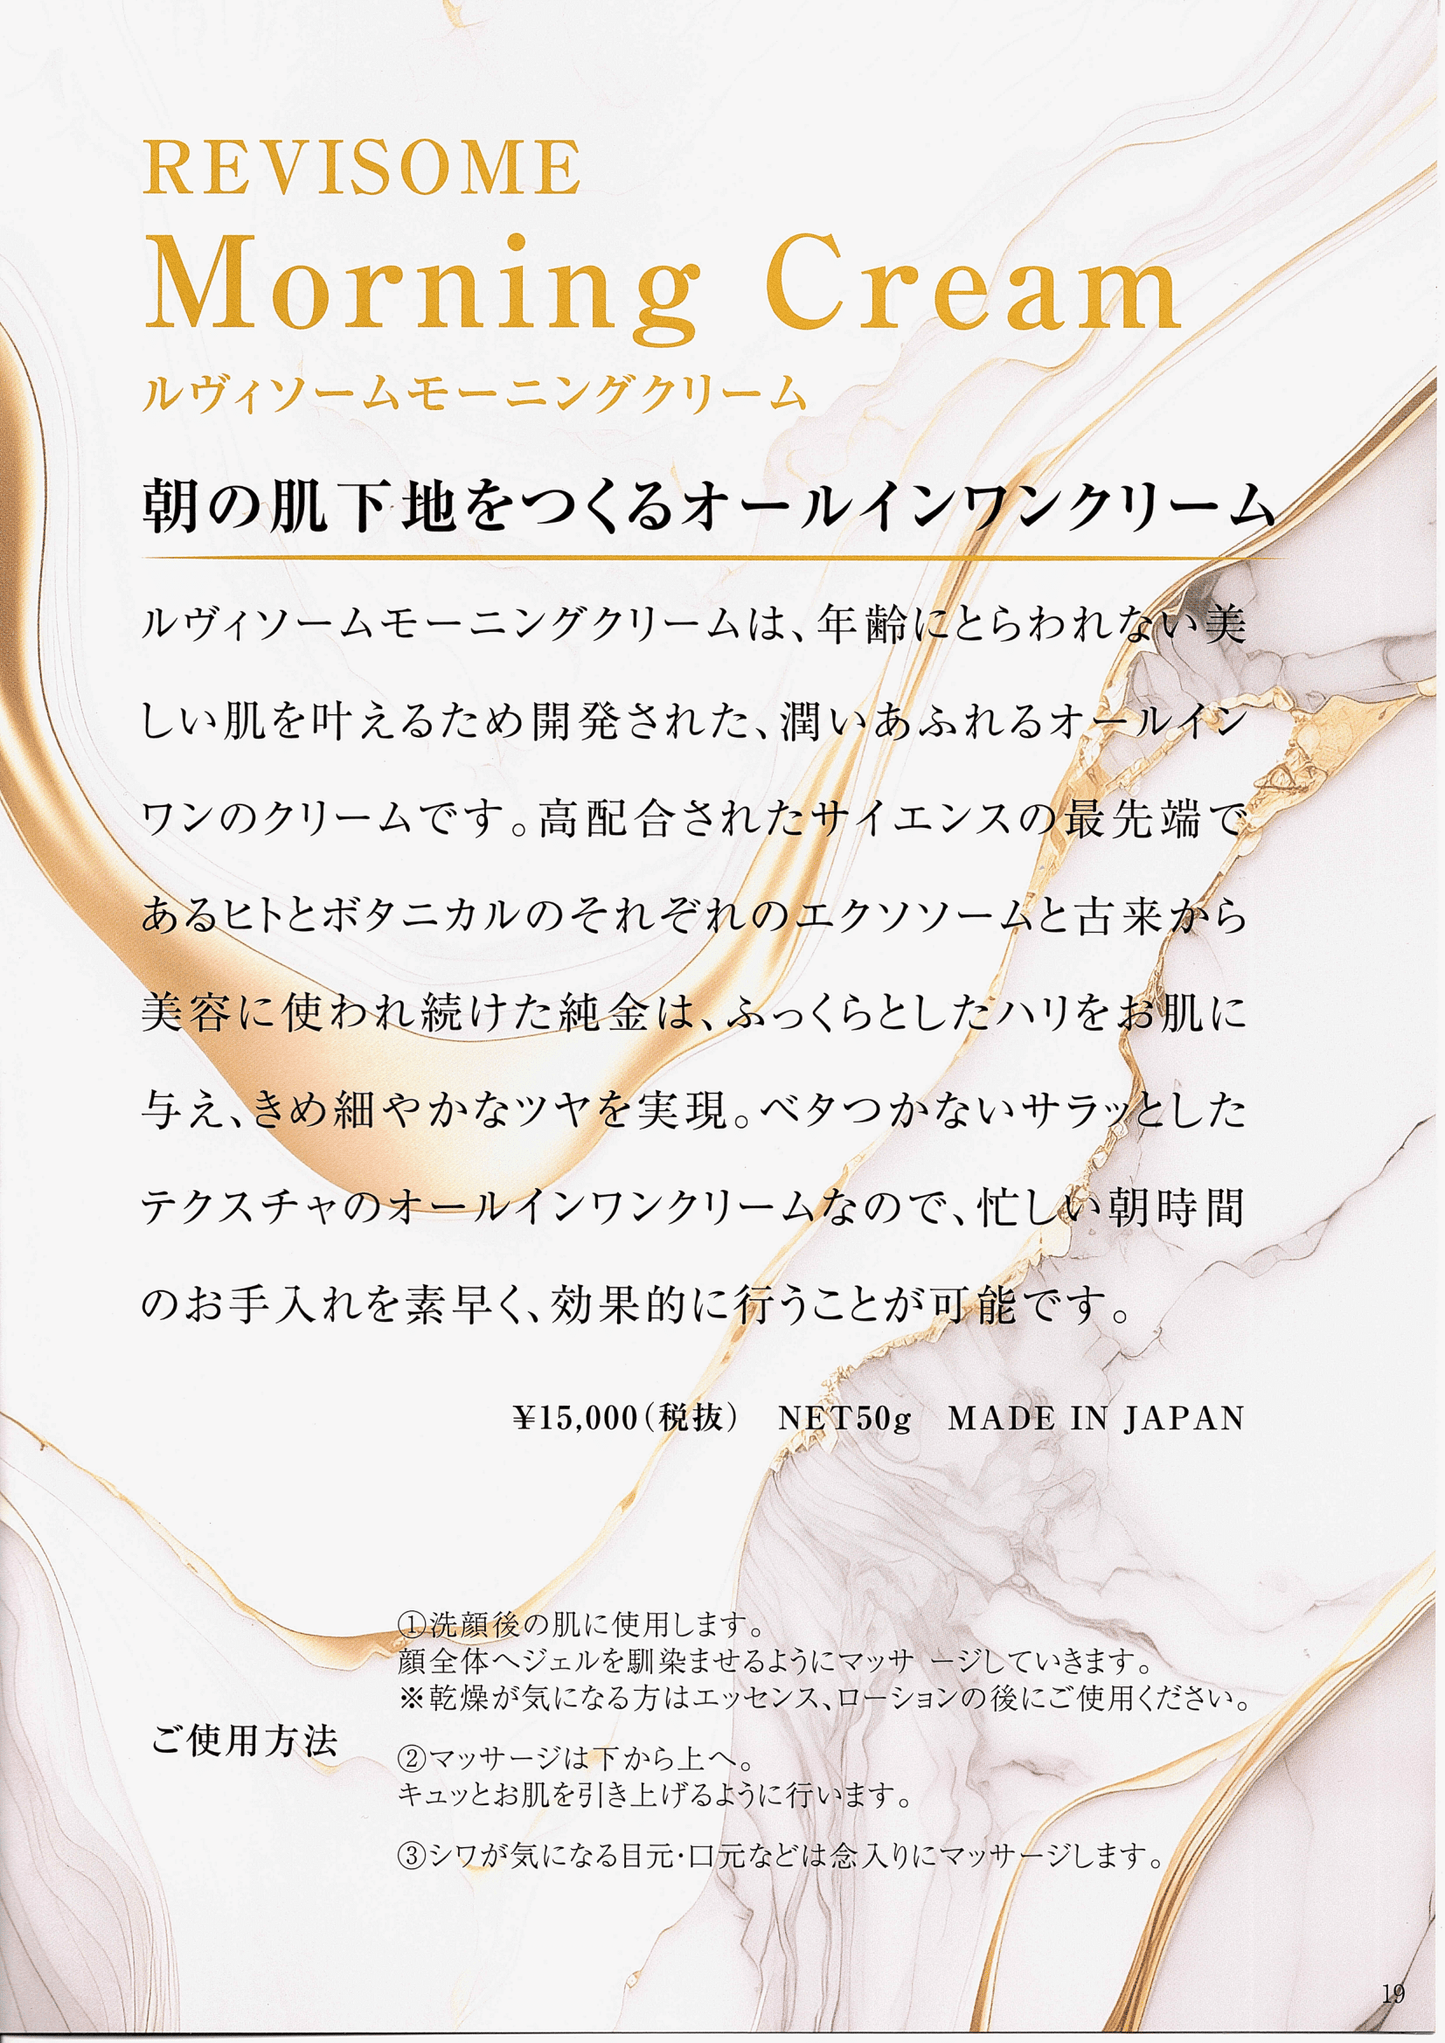 Reviエクソソーム モイストローション【化粧水】(120ml)